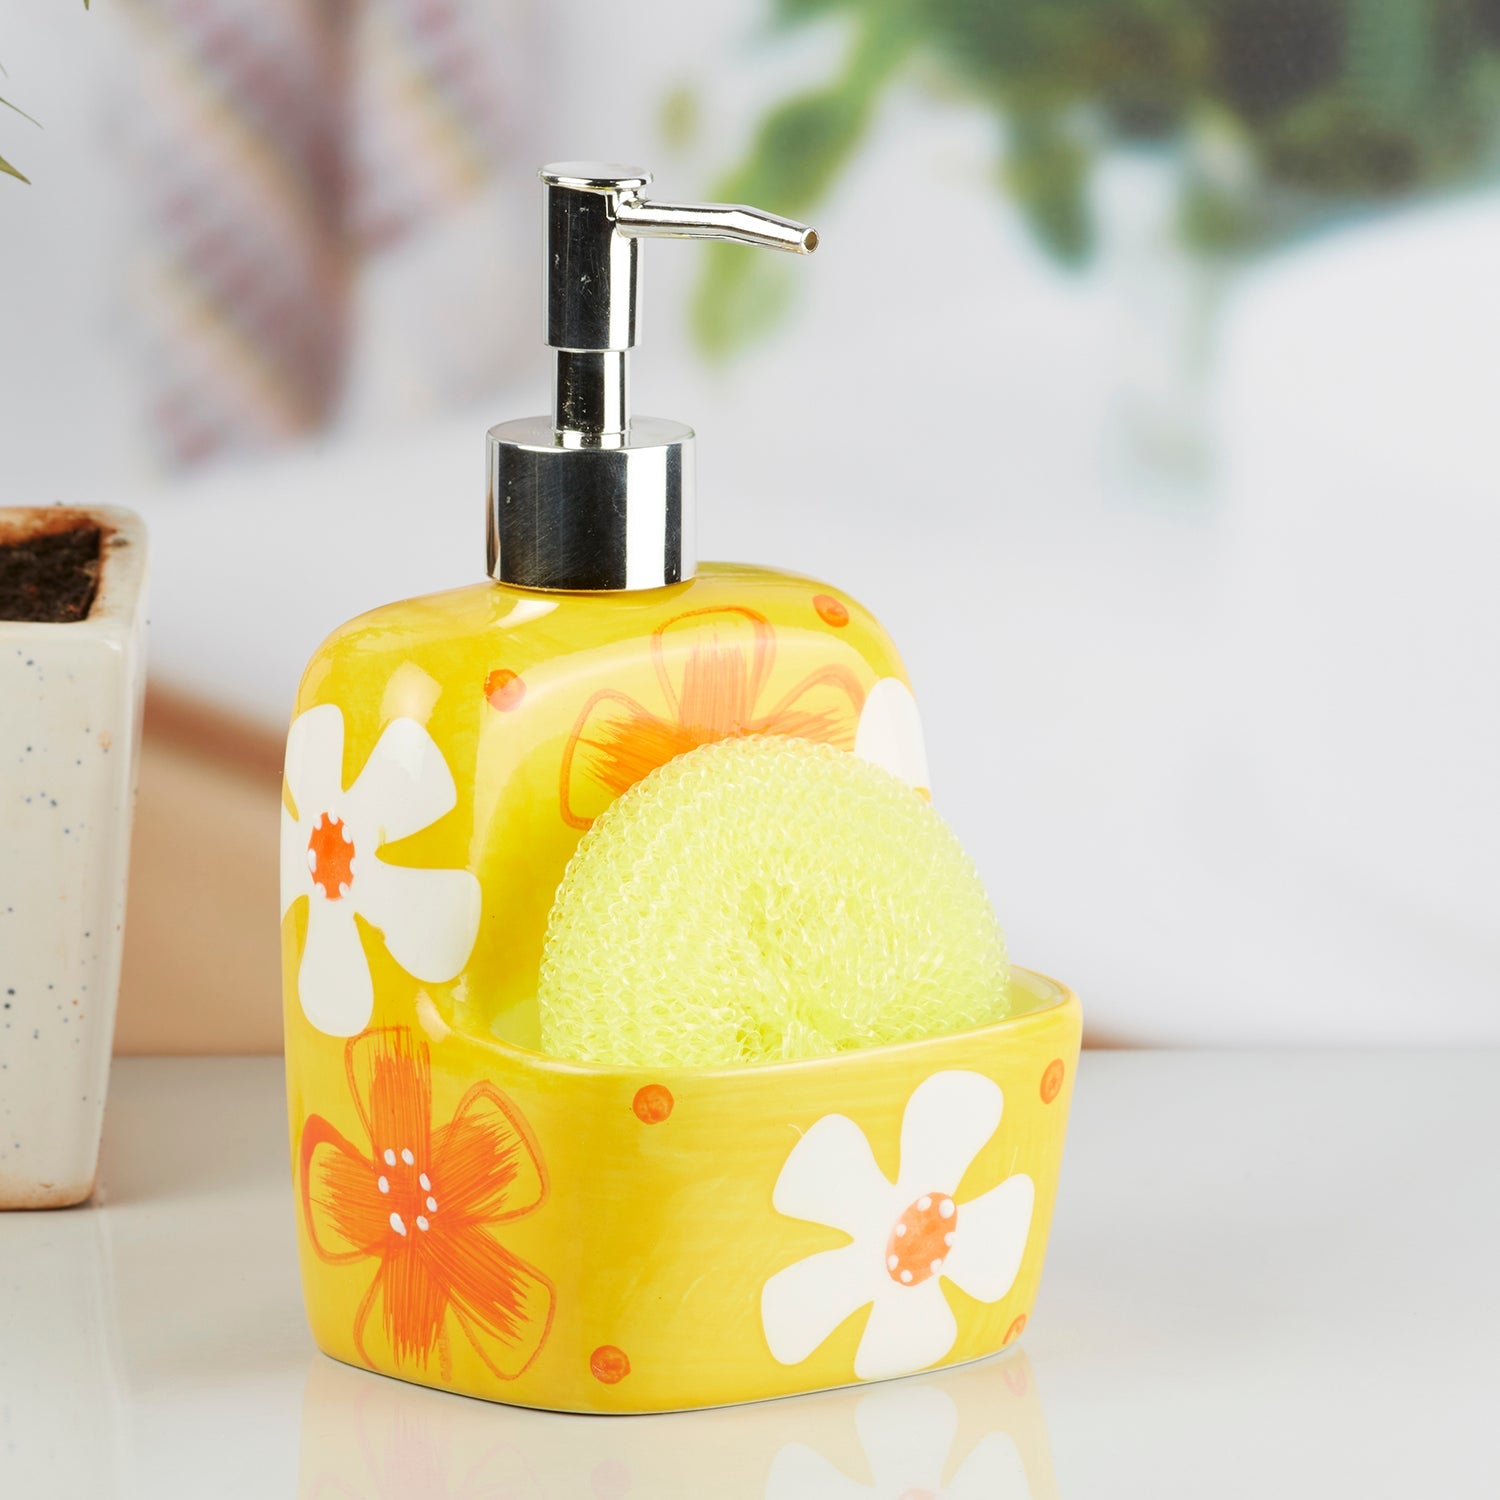 Ceramic Soap Dispenser handwash Pump for Bathroom, Set of 1, Yellow (8047)